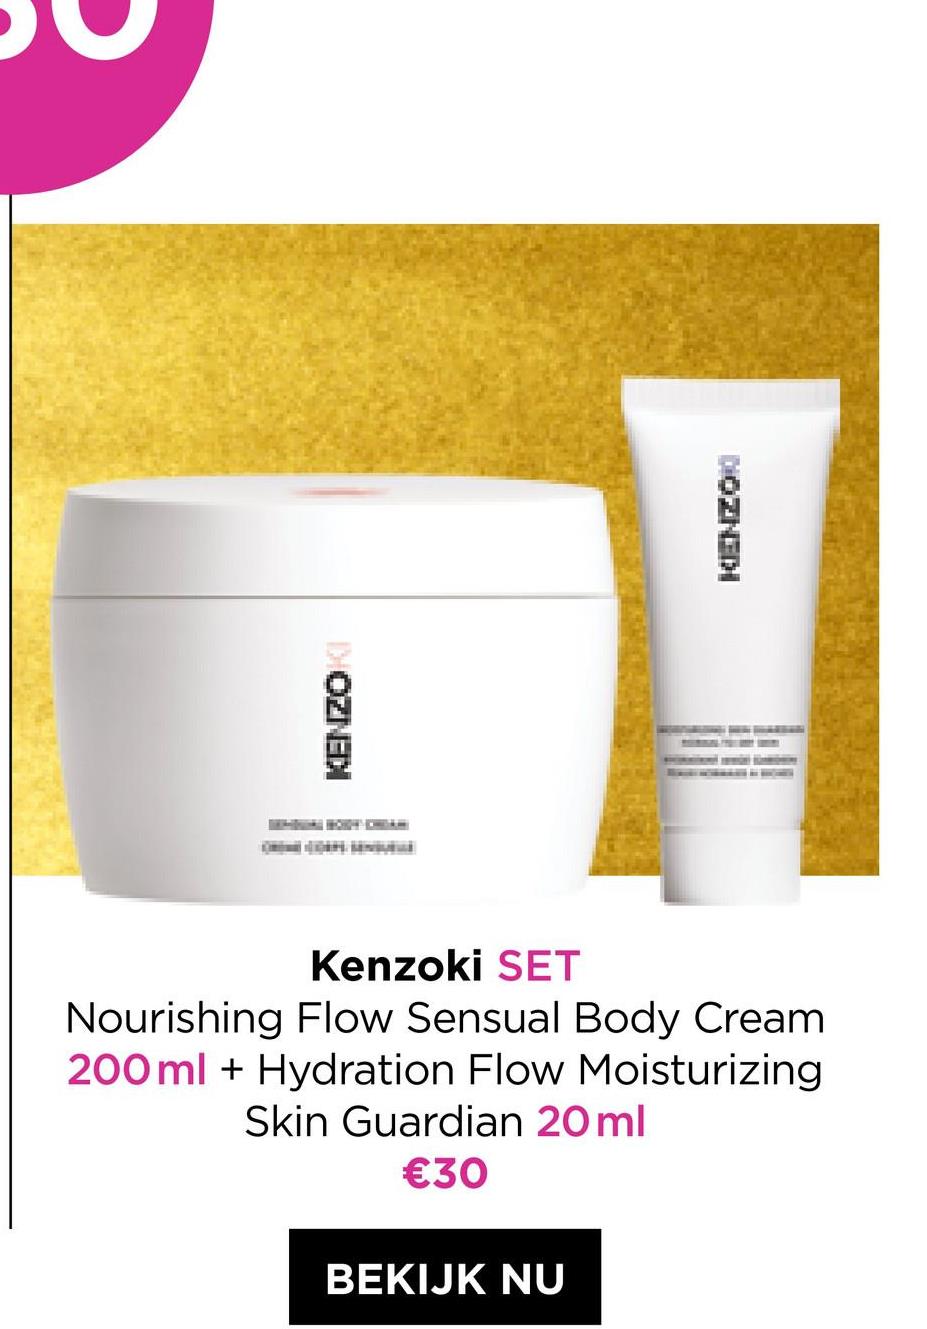 OZNEDI
H
KENZON
Kenzoki SET
Nourishing Flow Sensual Body Cream
200 ml + Hydration Flow Moisturizing
Skin Guardian 20 ml
€30
BEKIJK NU